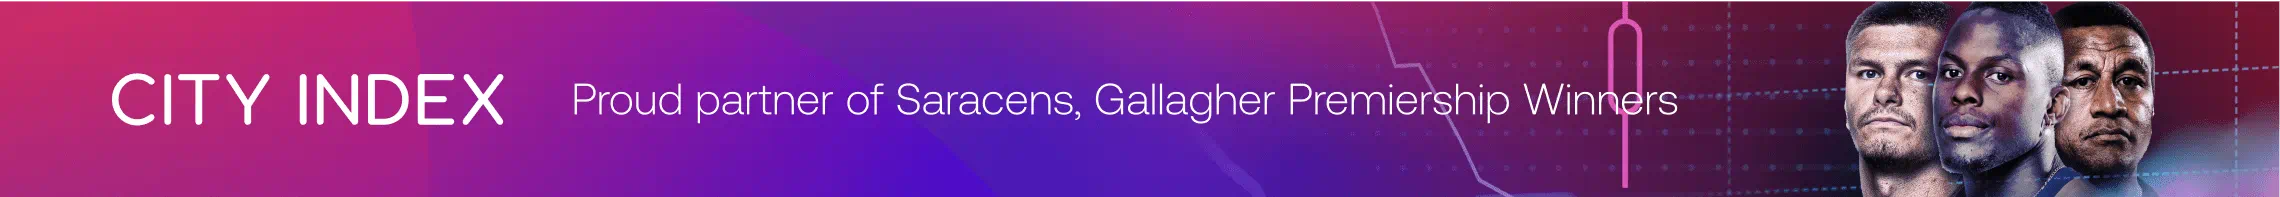 City Index - Proud partner of Saracens, Gallagher Premiership Winners